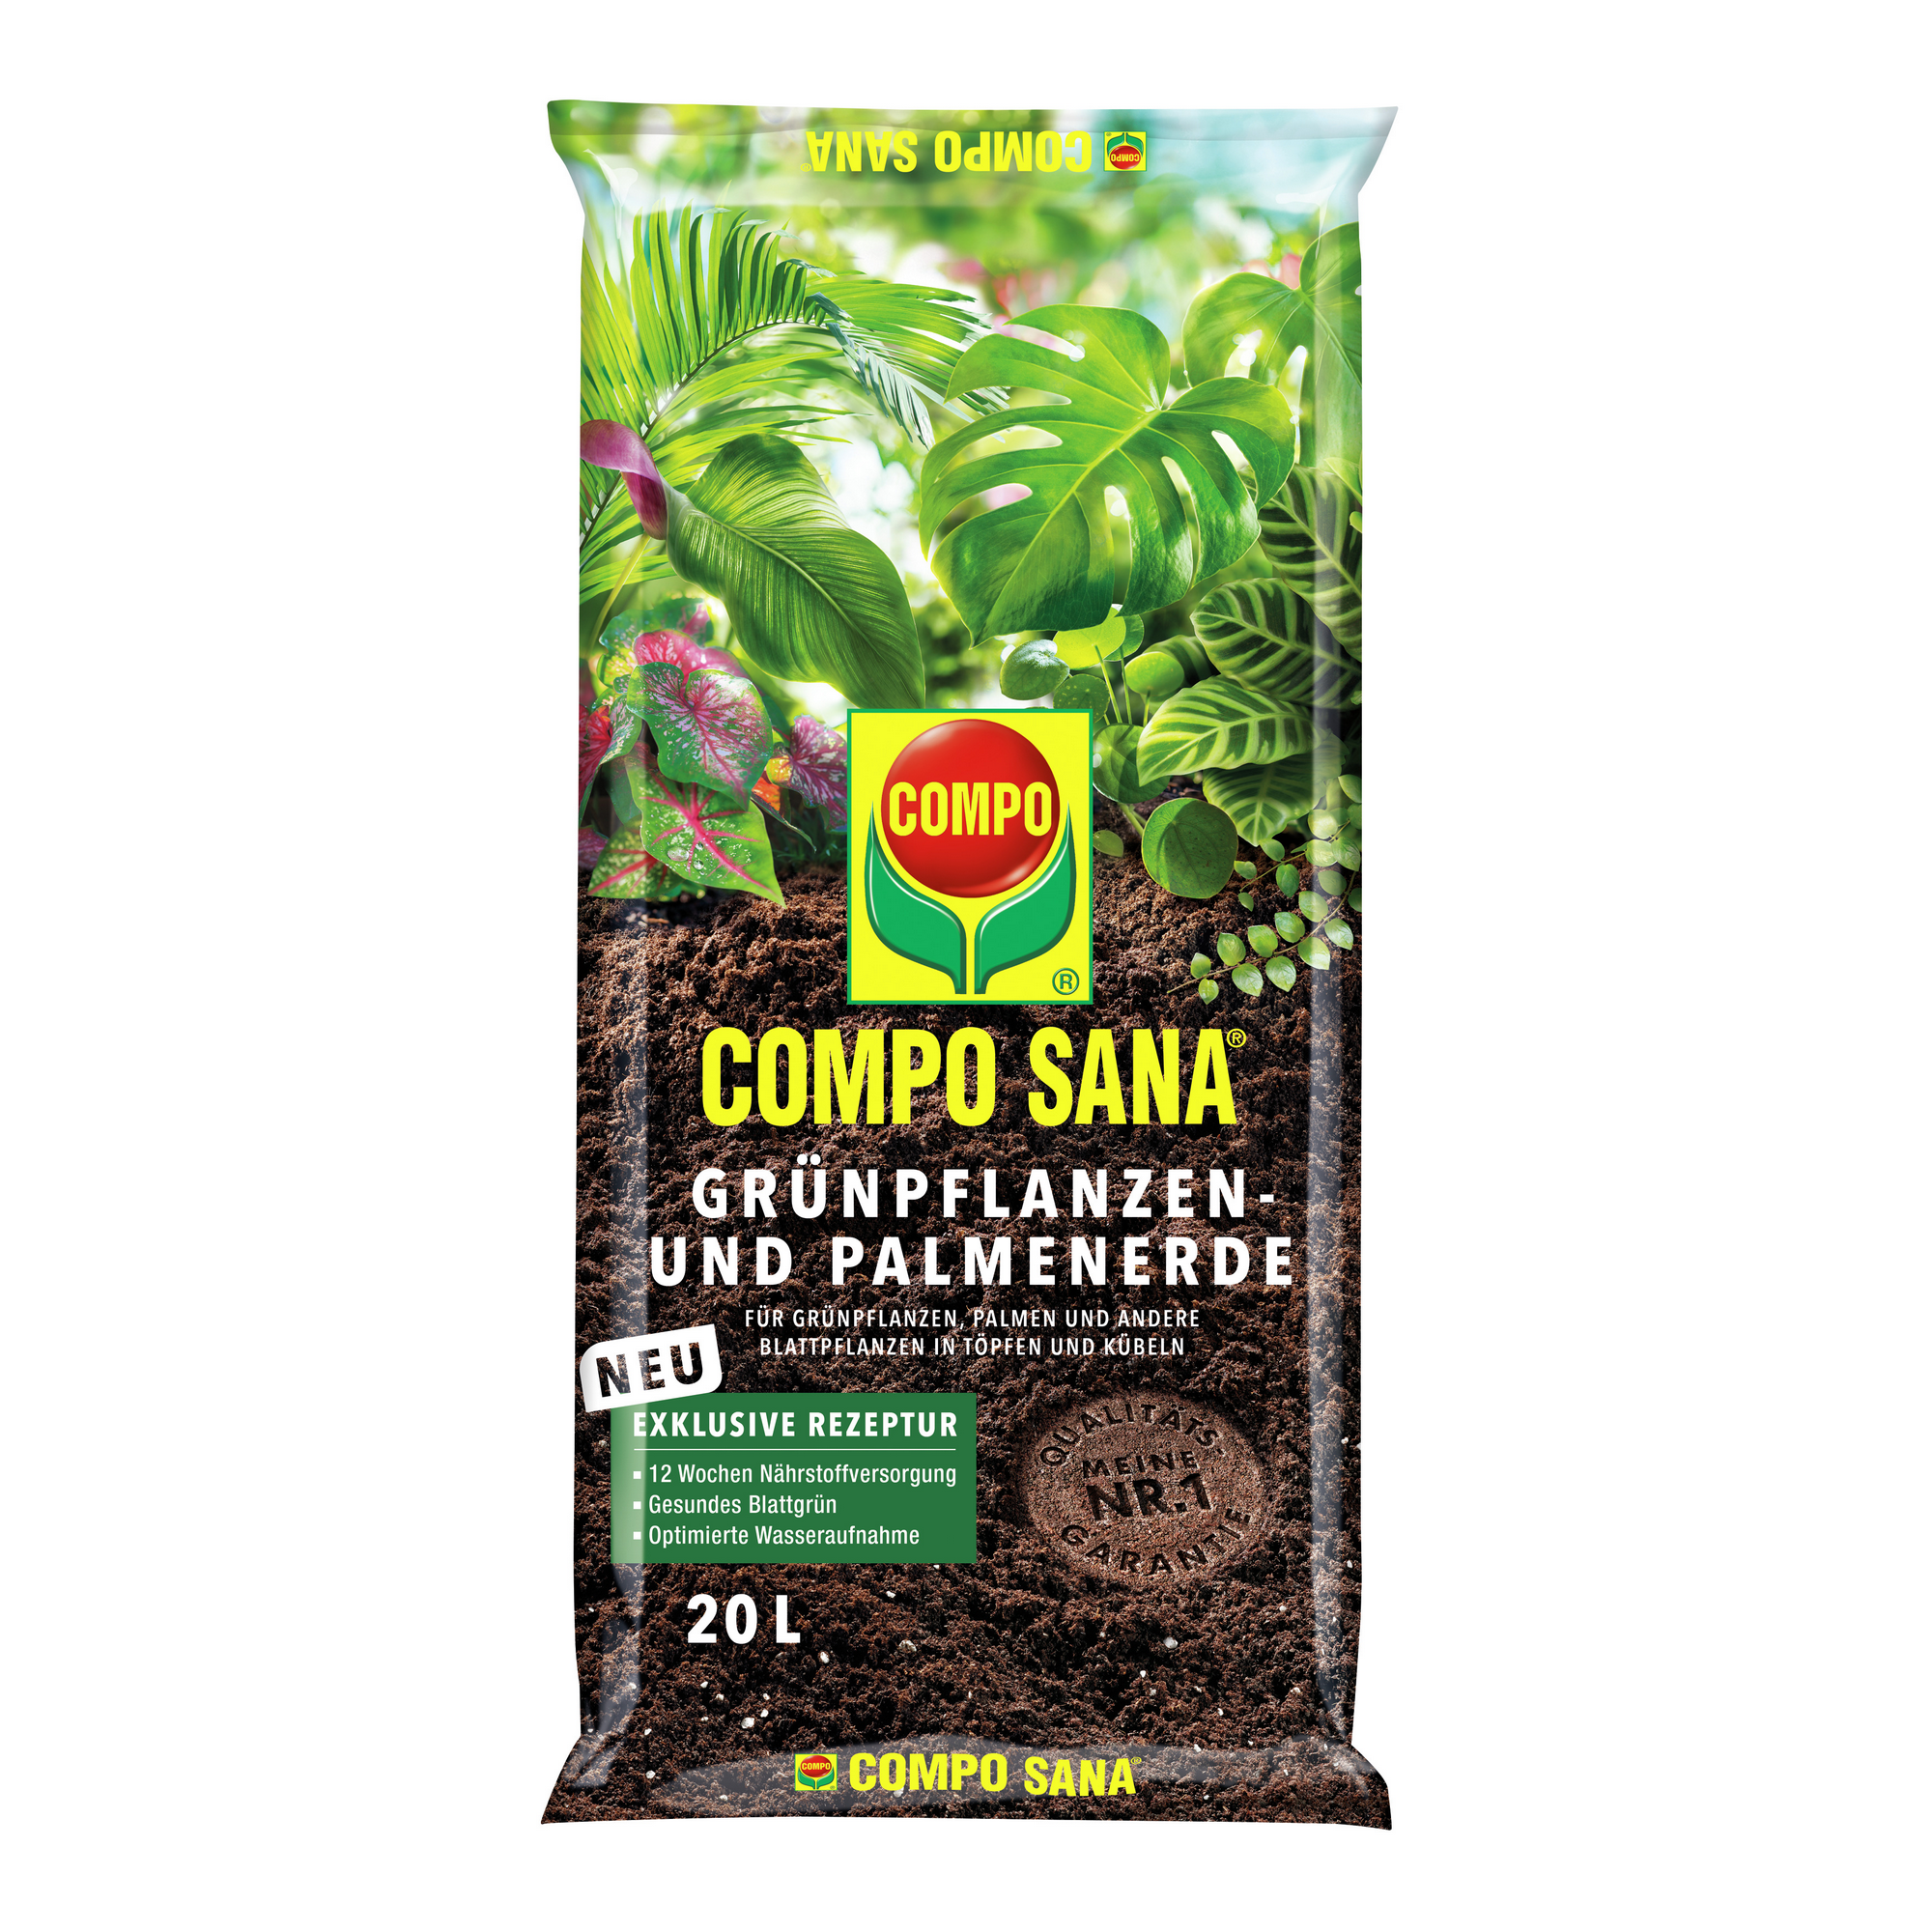 Compo Sana® Grünpflanzen- und Palmenerde 20 l + product picture